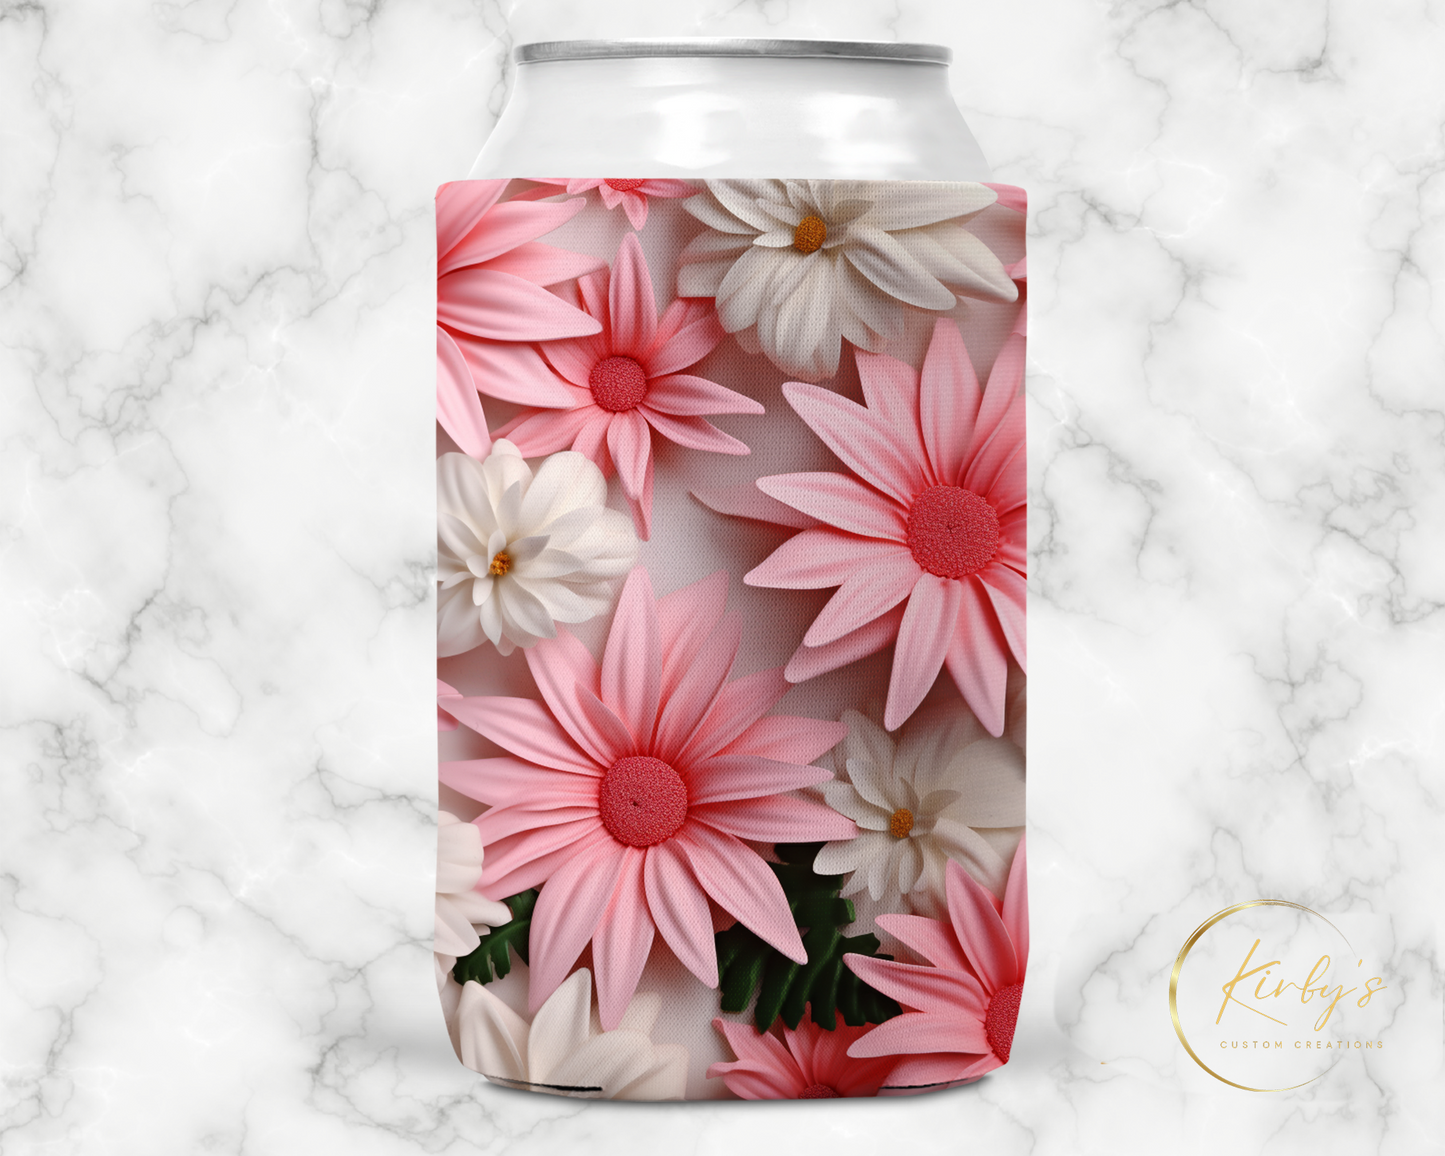 3D Floral Can Holder Pink White Flowers Standard Soft Koozie